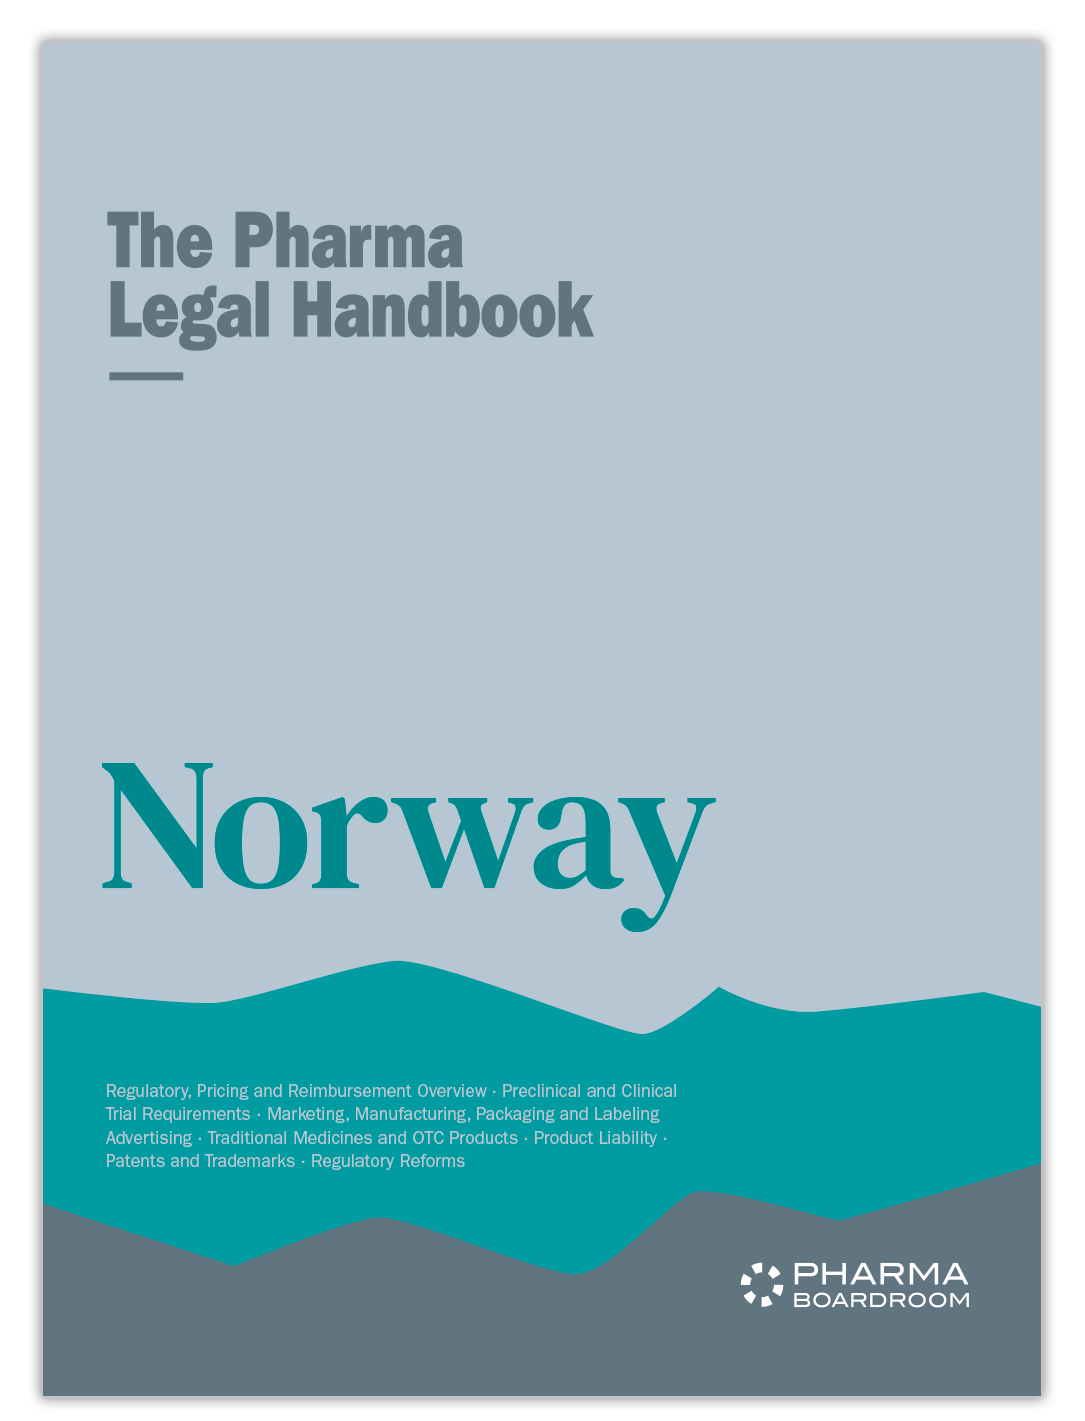 The Pharma Legal Handbook: Norway